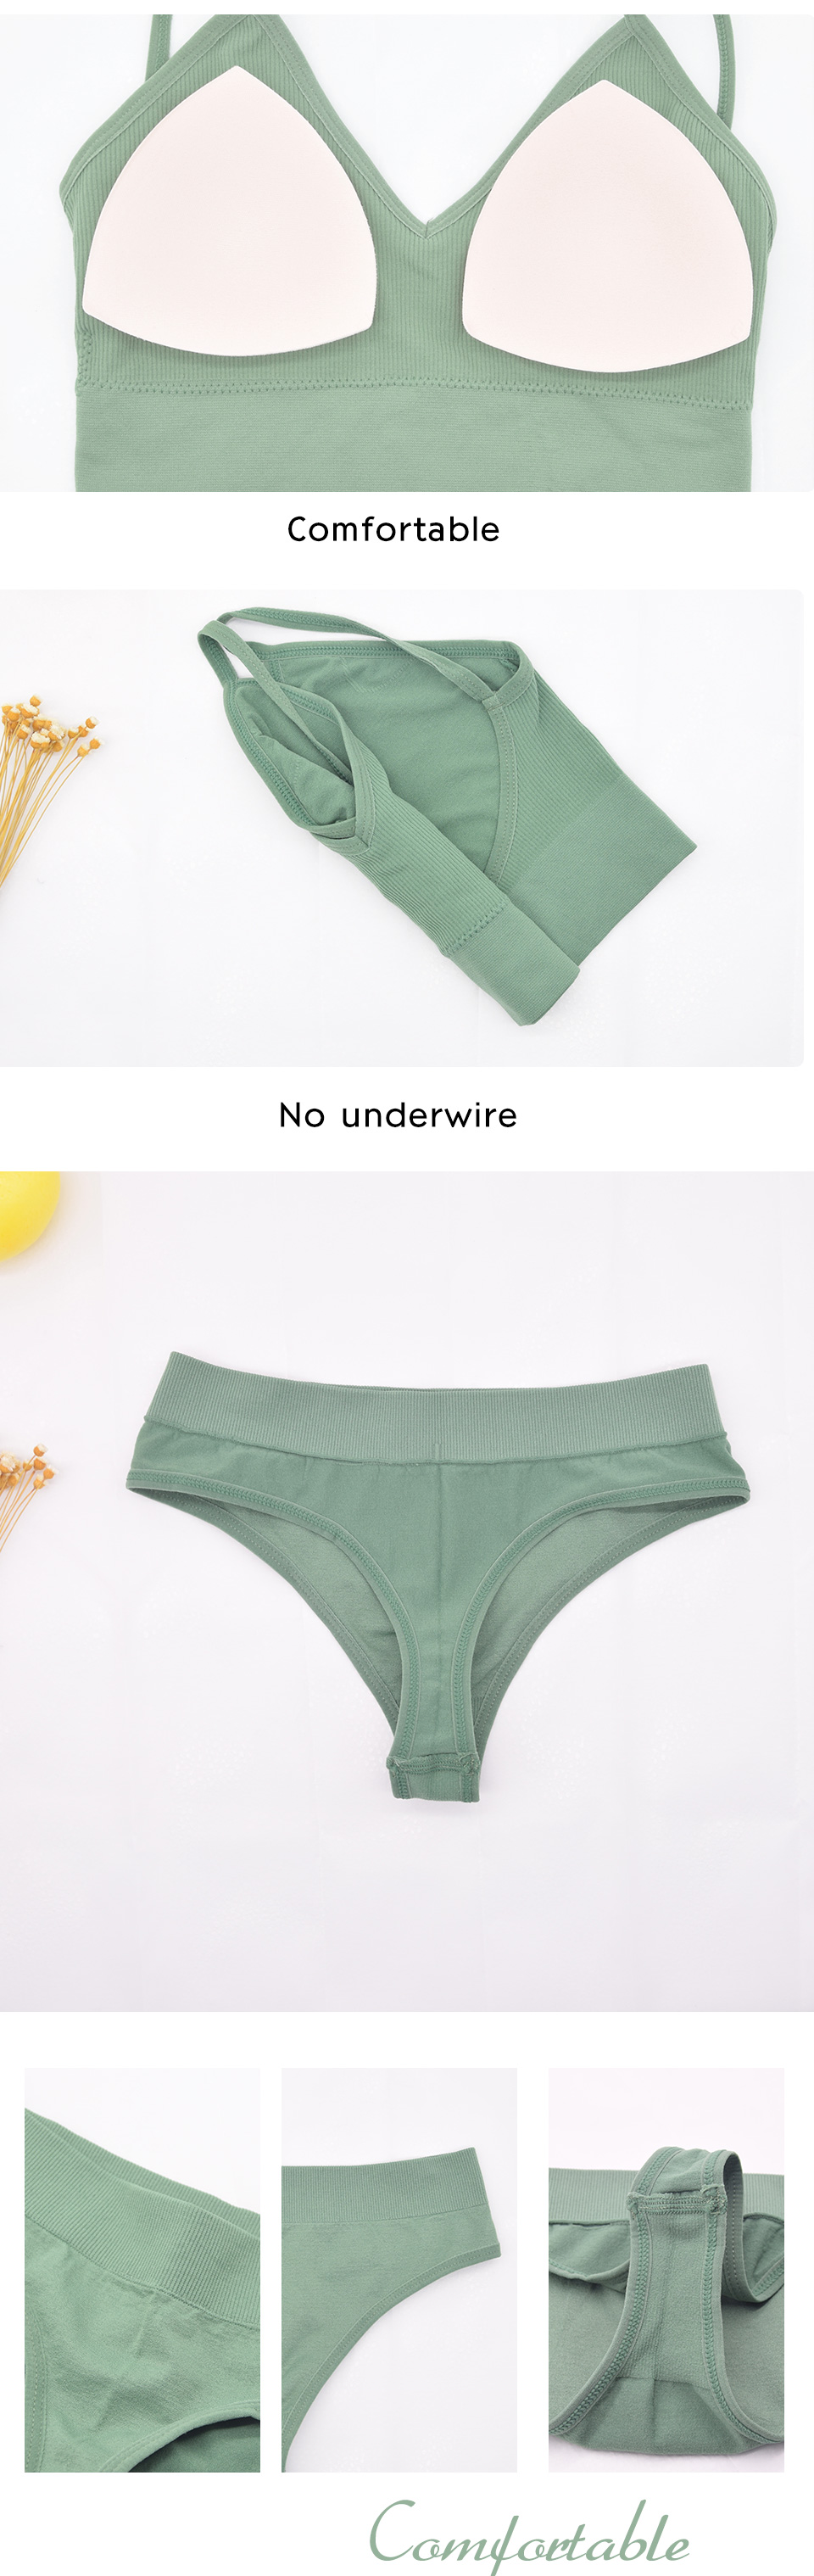 FallSweet Push Up Lace Bra Set for Women PLus Size Bra and Panties Set -  intl